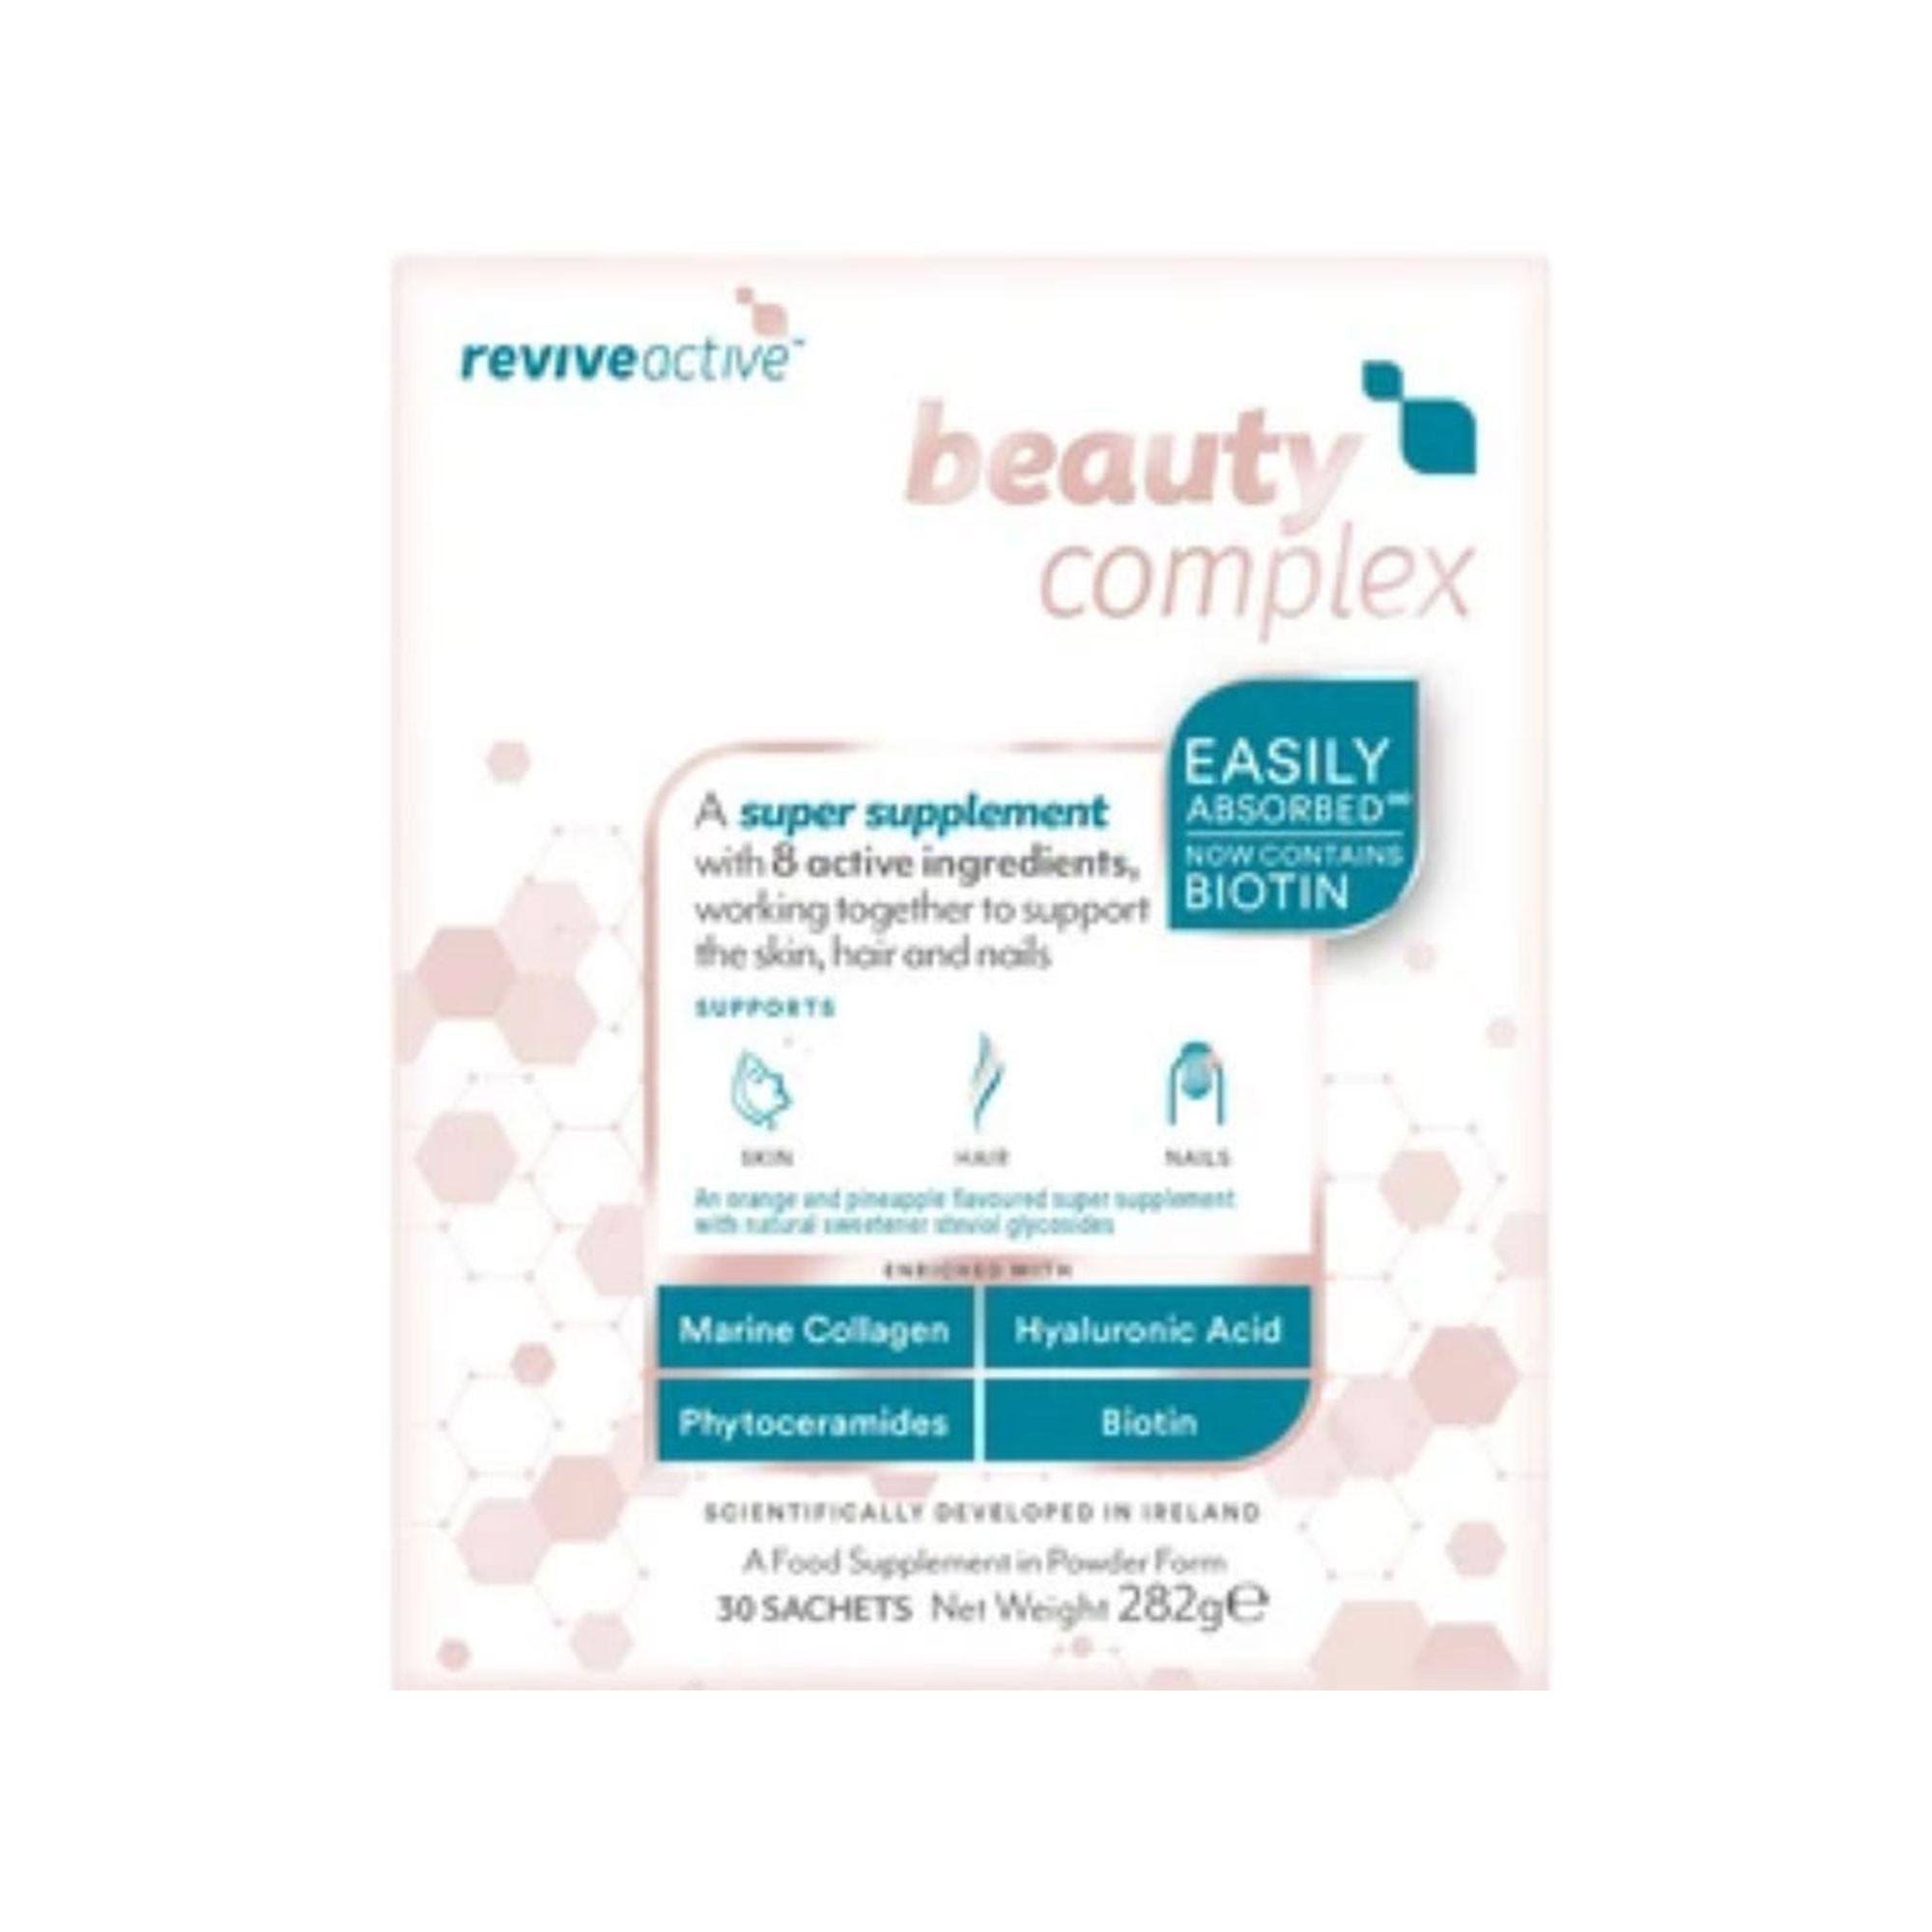 Beauty Complex Super Supplement by Revive Active | 8 Active Ingredients